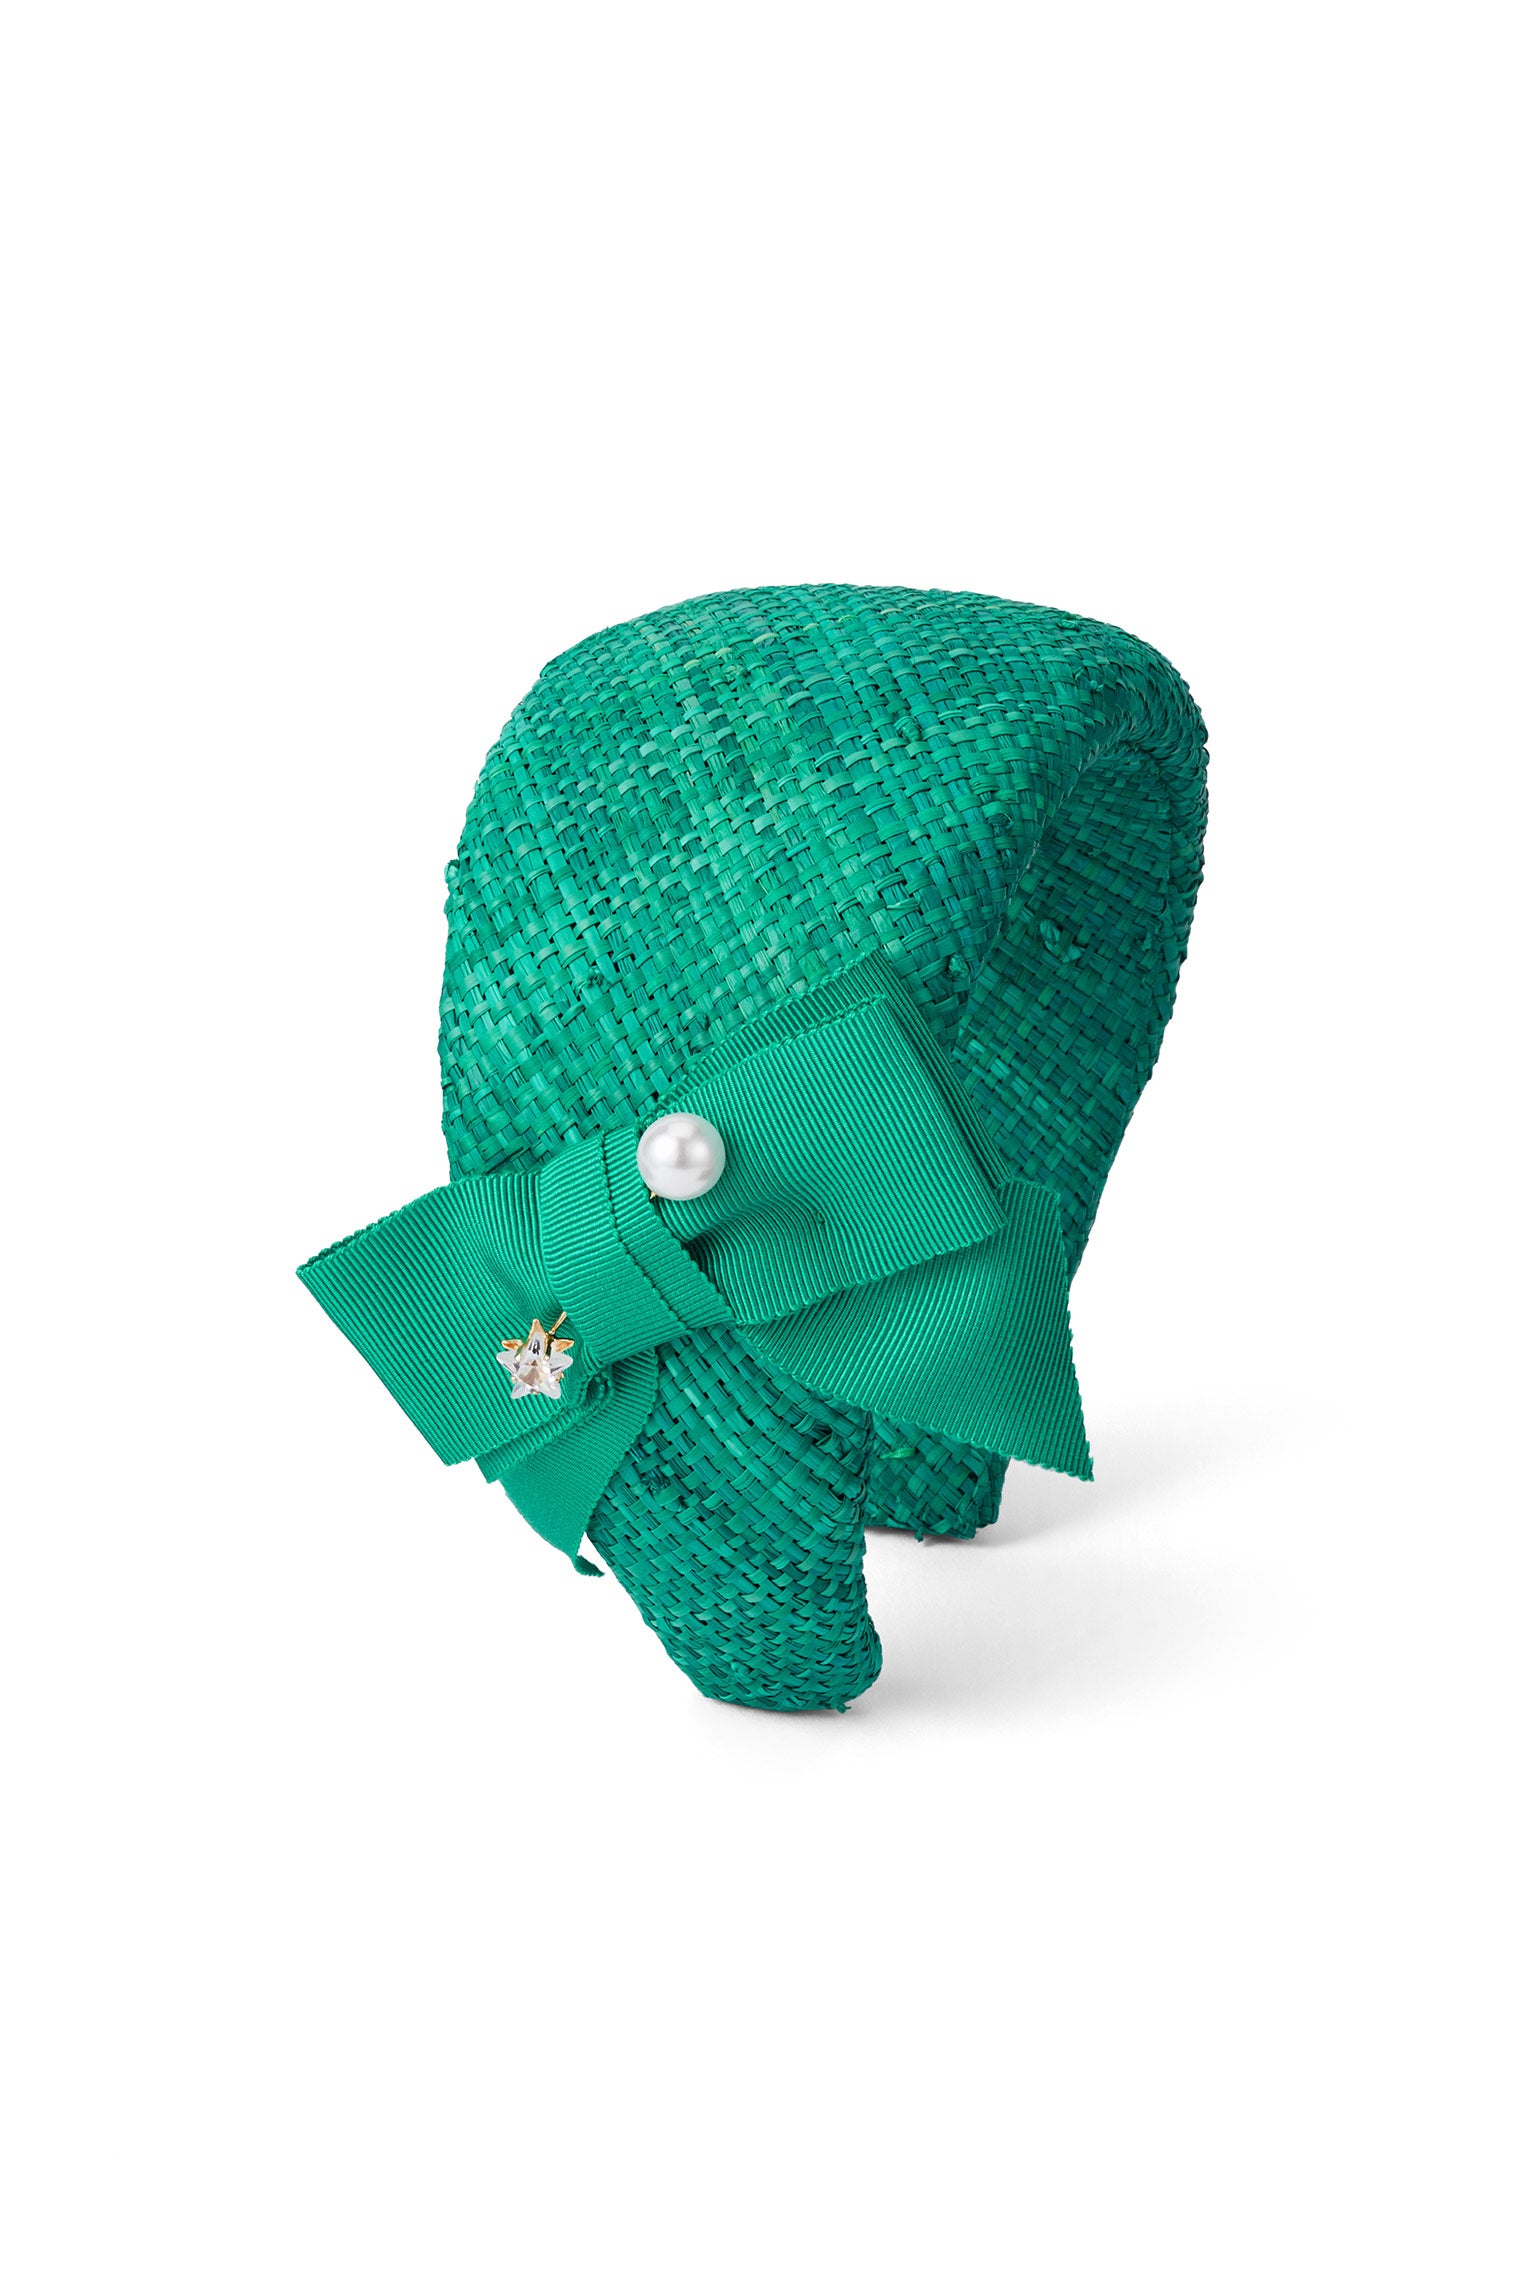 Tanami Headband - New Season Hat Collection - Lock & Co. Hatters London UK